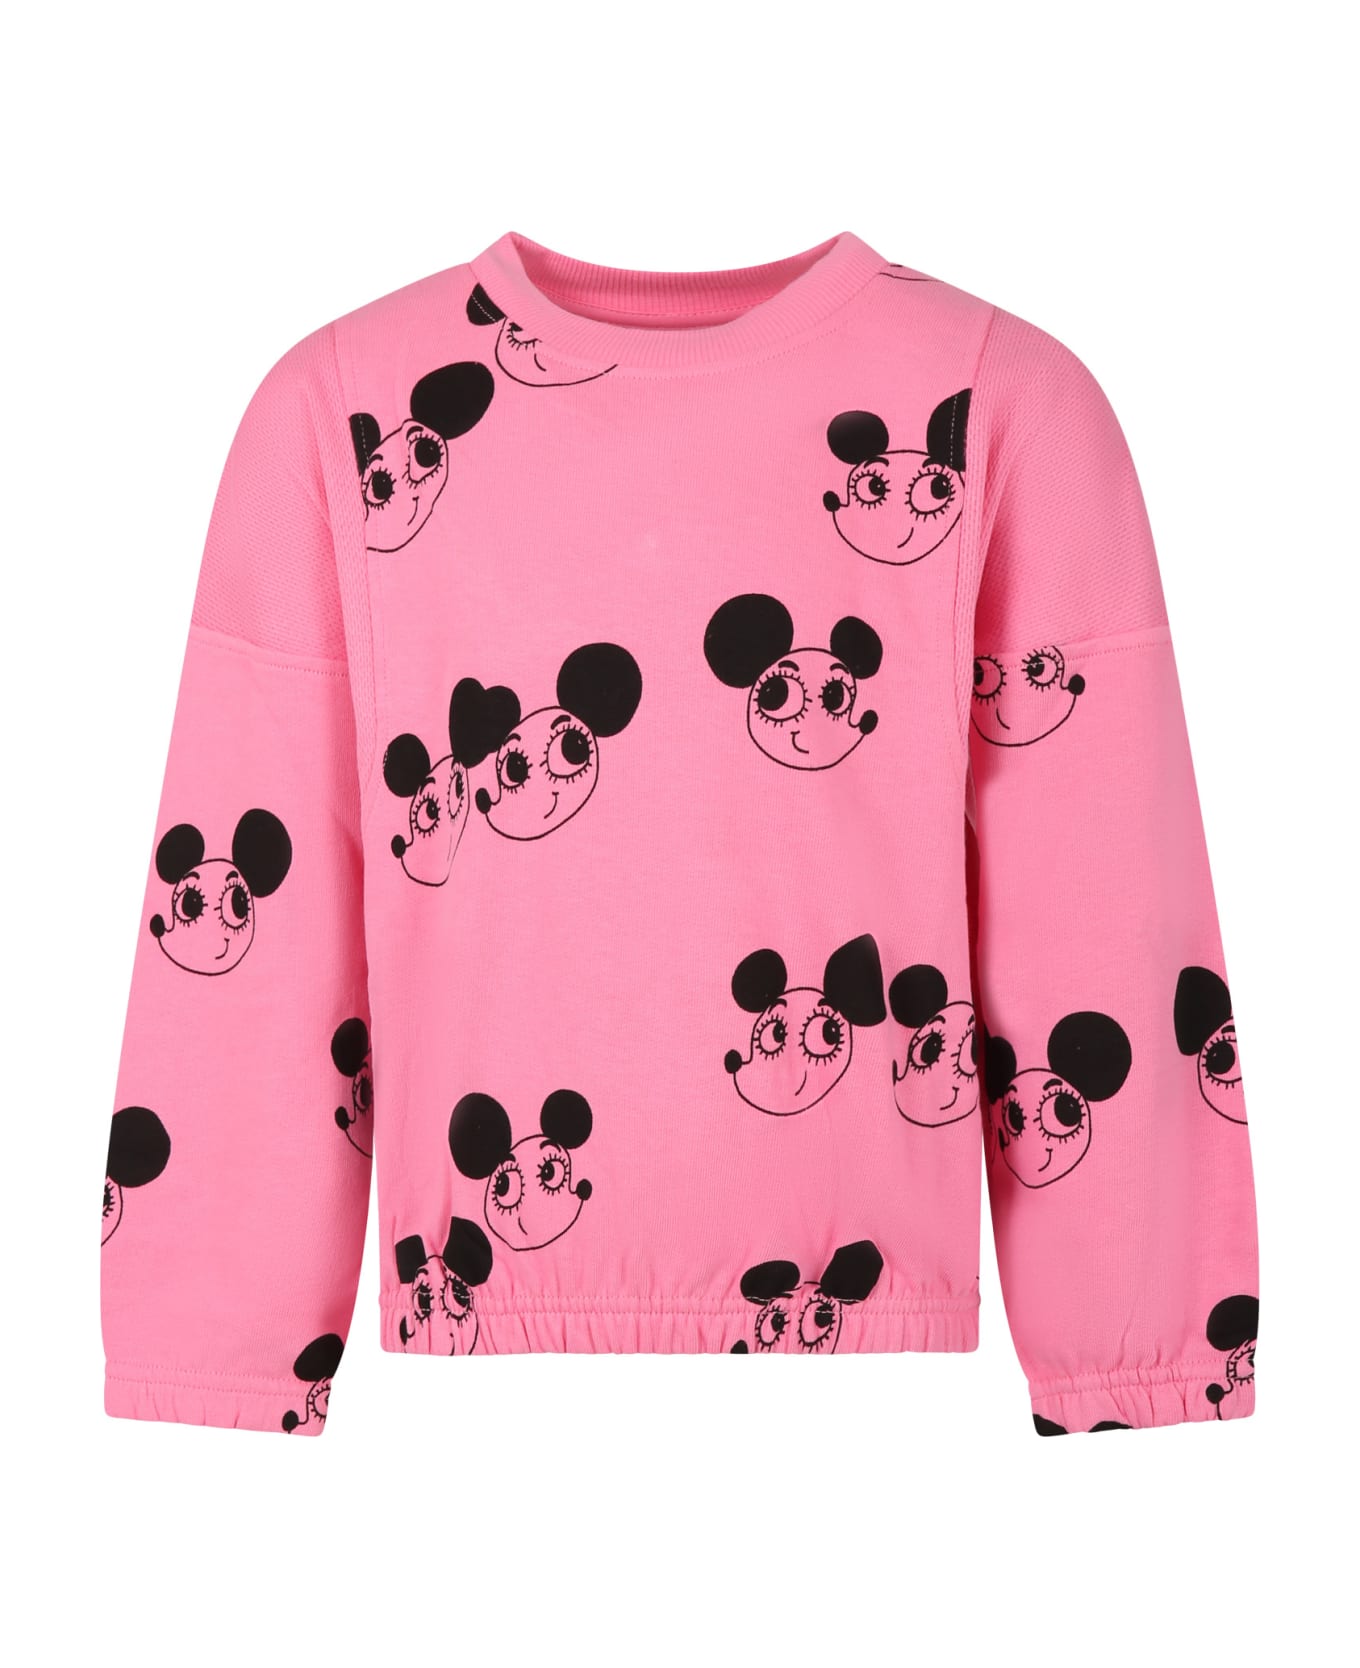 Mini Rodini Pink Sweatshirt For Girl With Mice - Pink ニットウェア＆スウェットシャツ